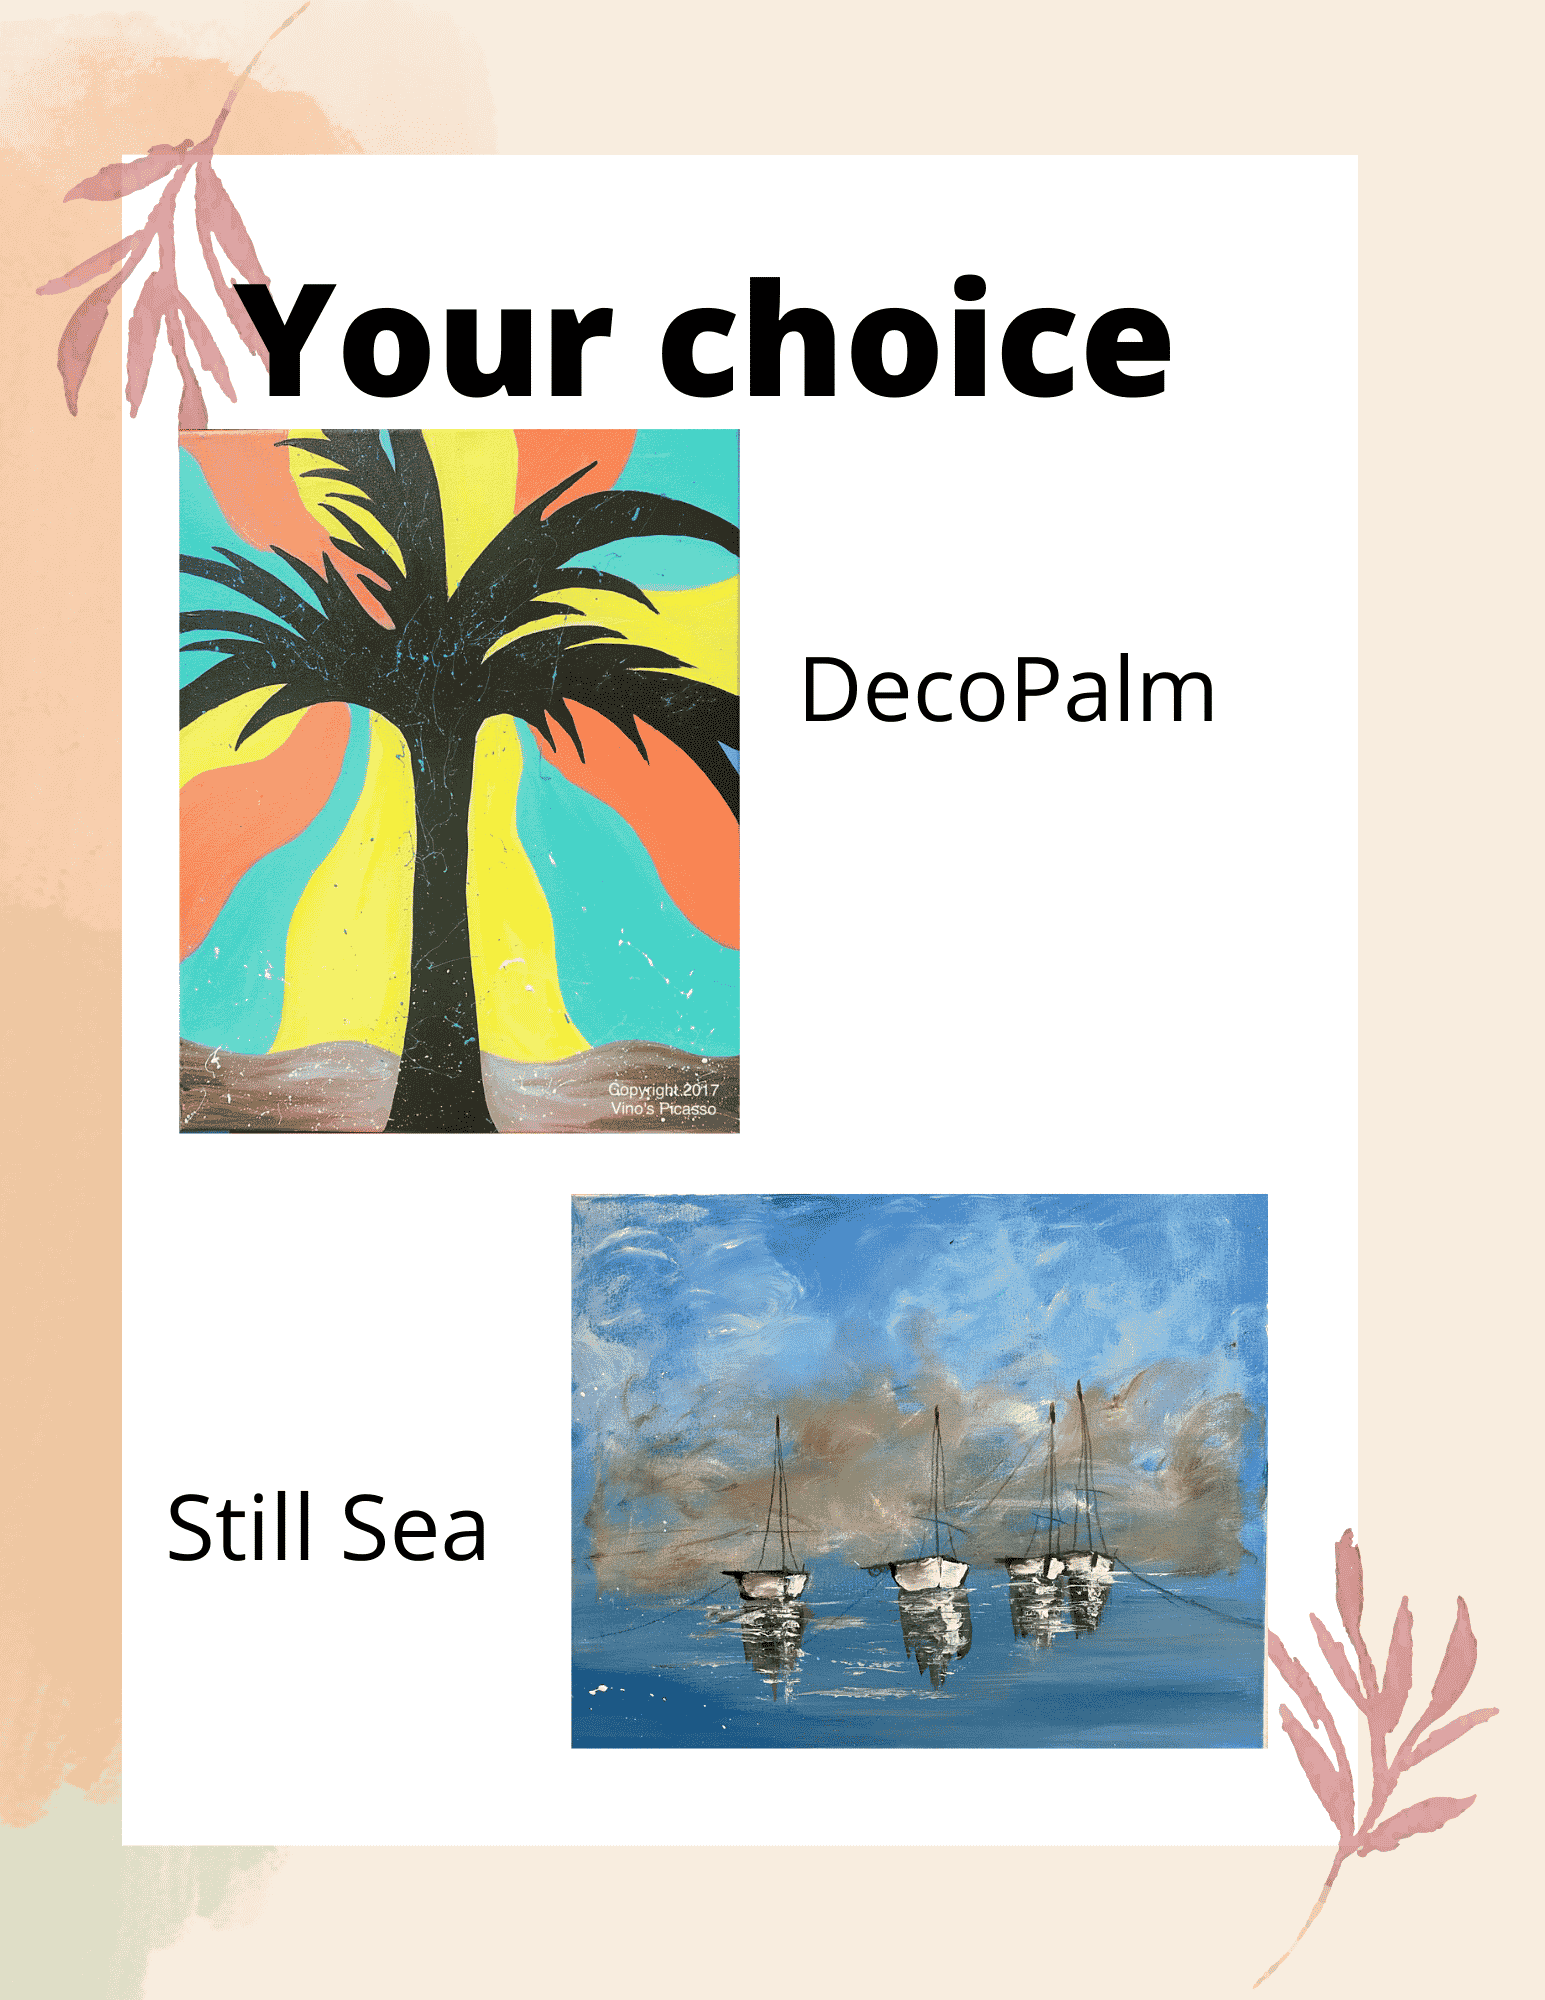 Your Choice Palm or Still Sea